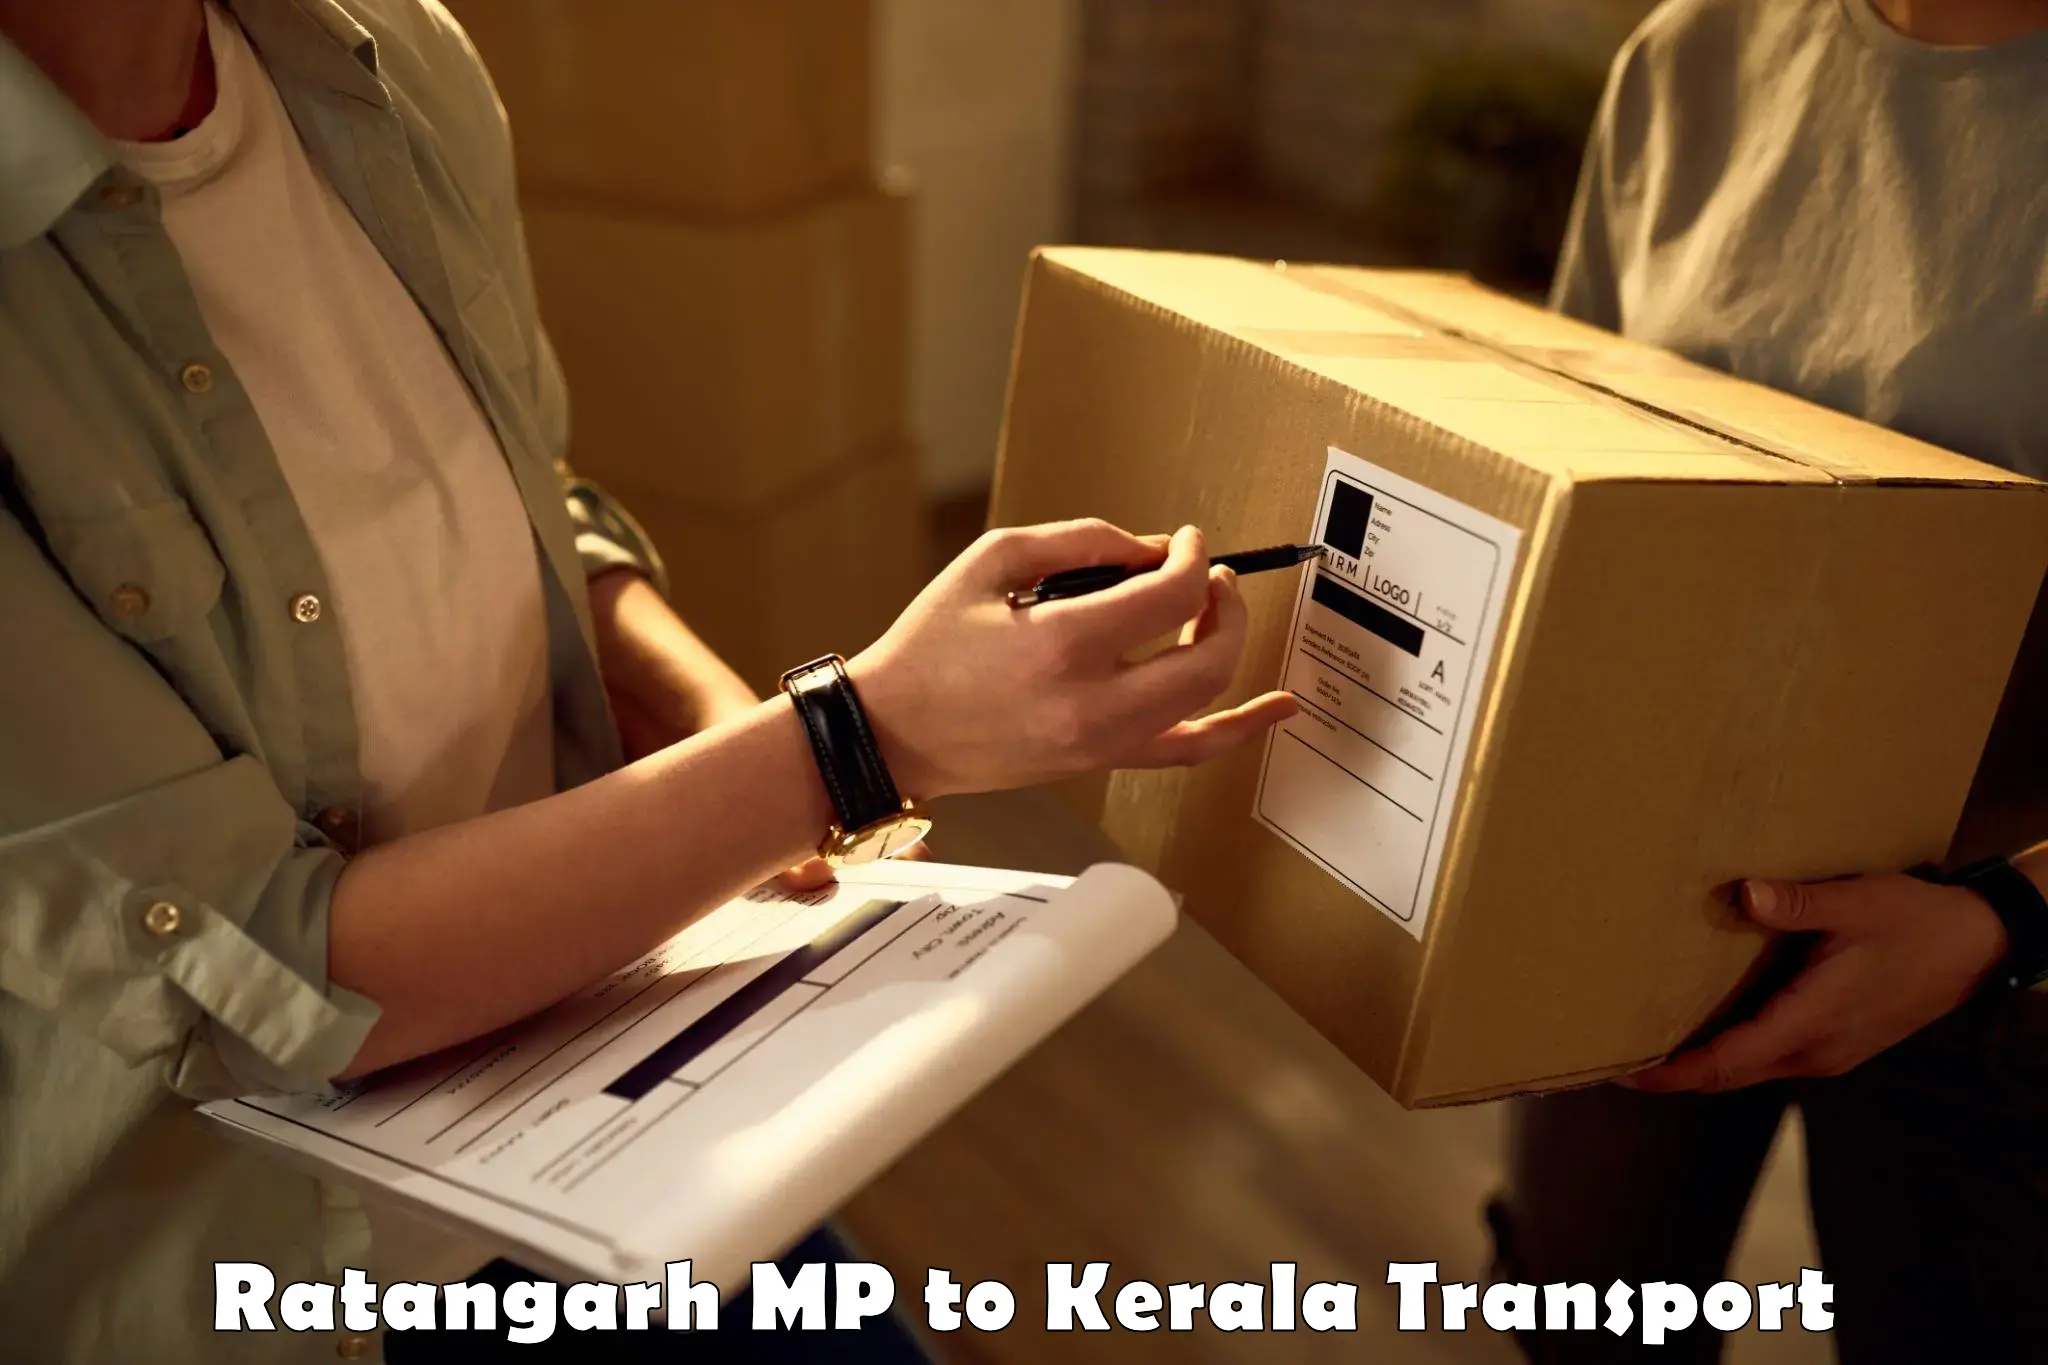 Delivery service Ratangarh MP to Kochi